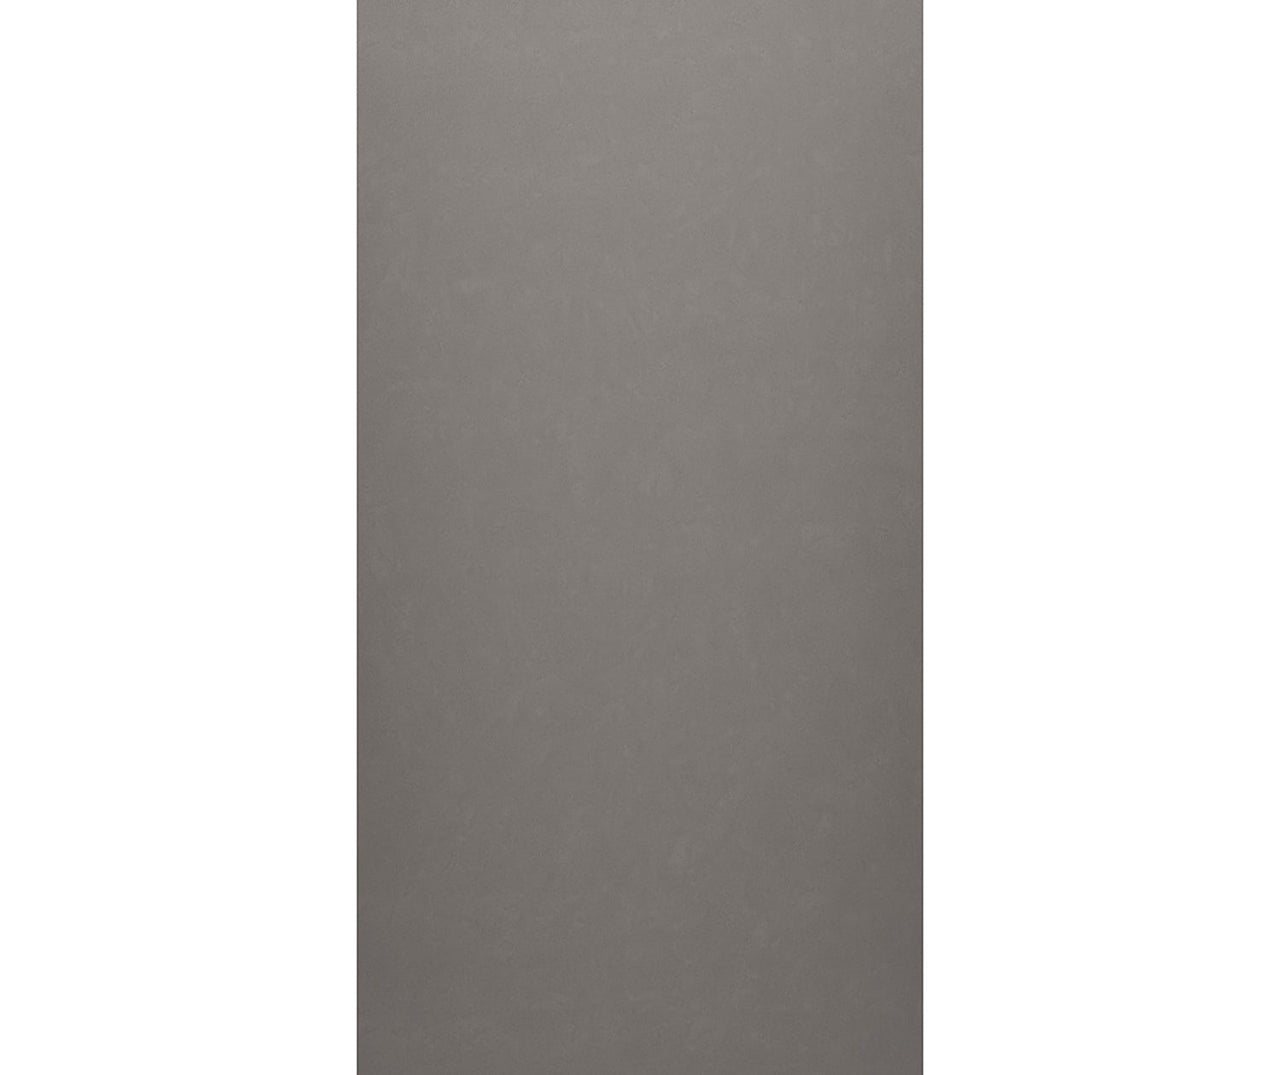 SMMK-8442-1 42 x 84 Swanstone Smooth Tile Glue up Bathtub and Shower Single Wall Panel  - BNGBath